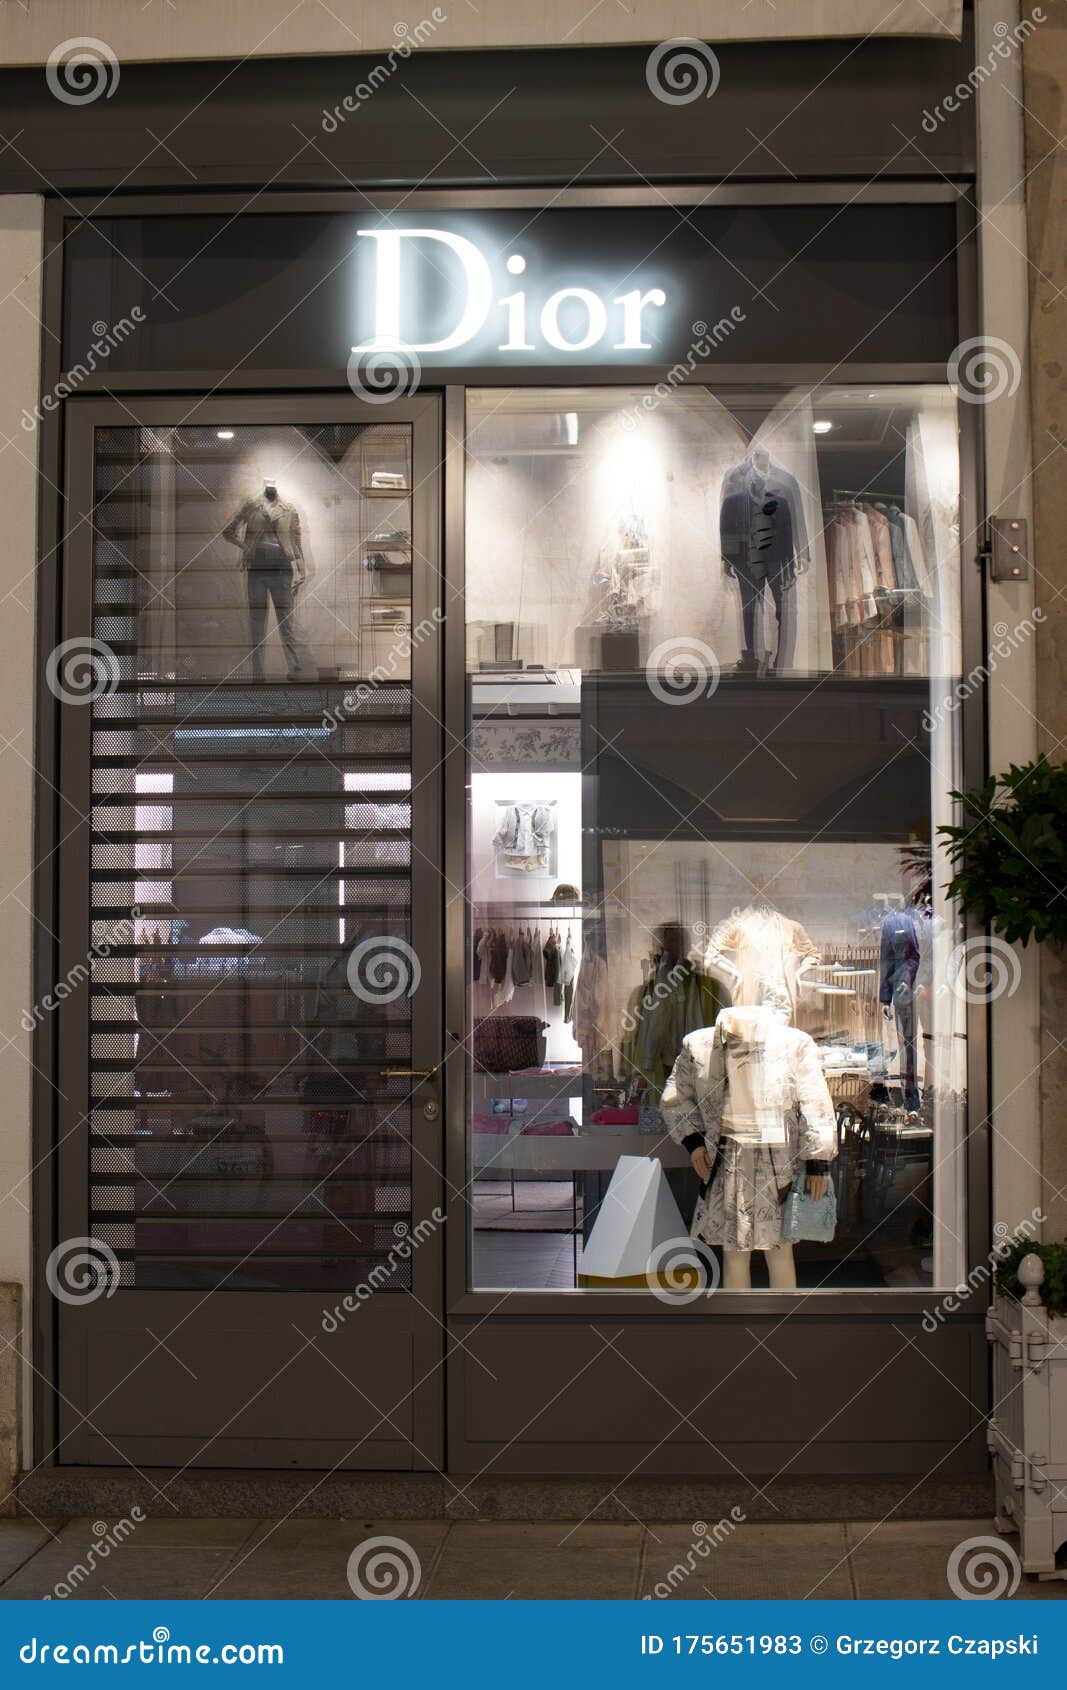 dior fashion store